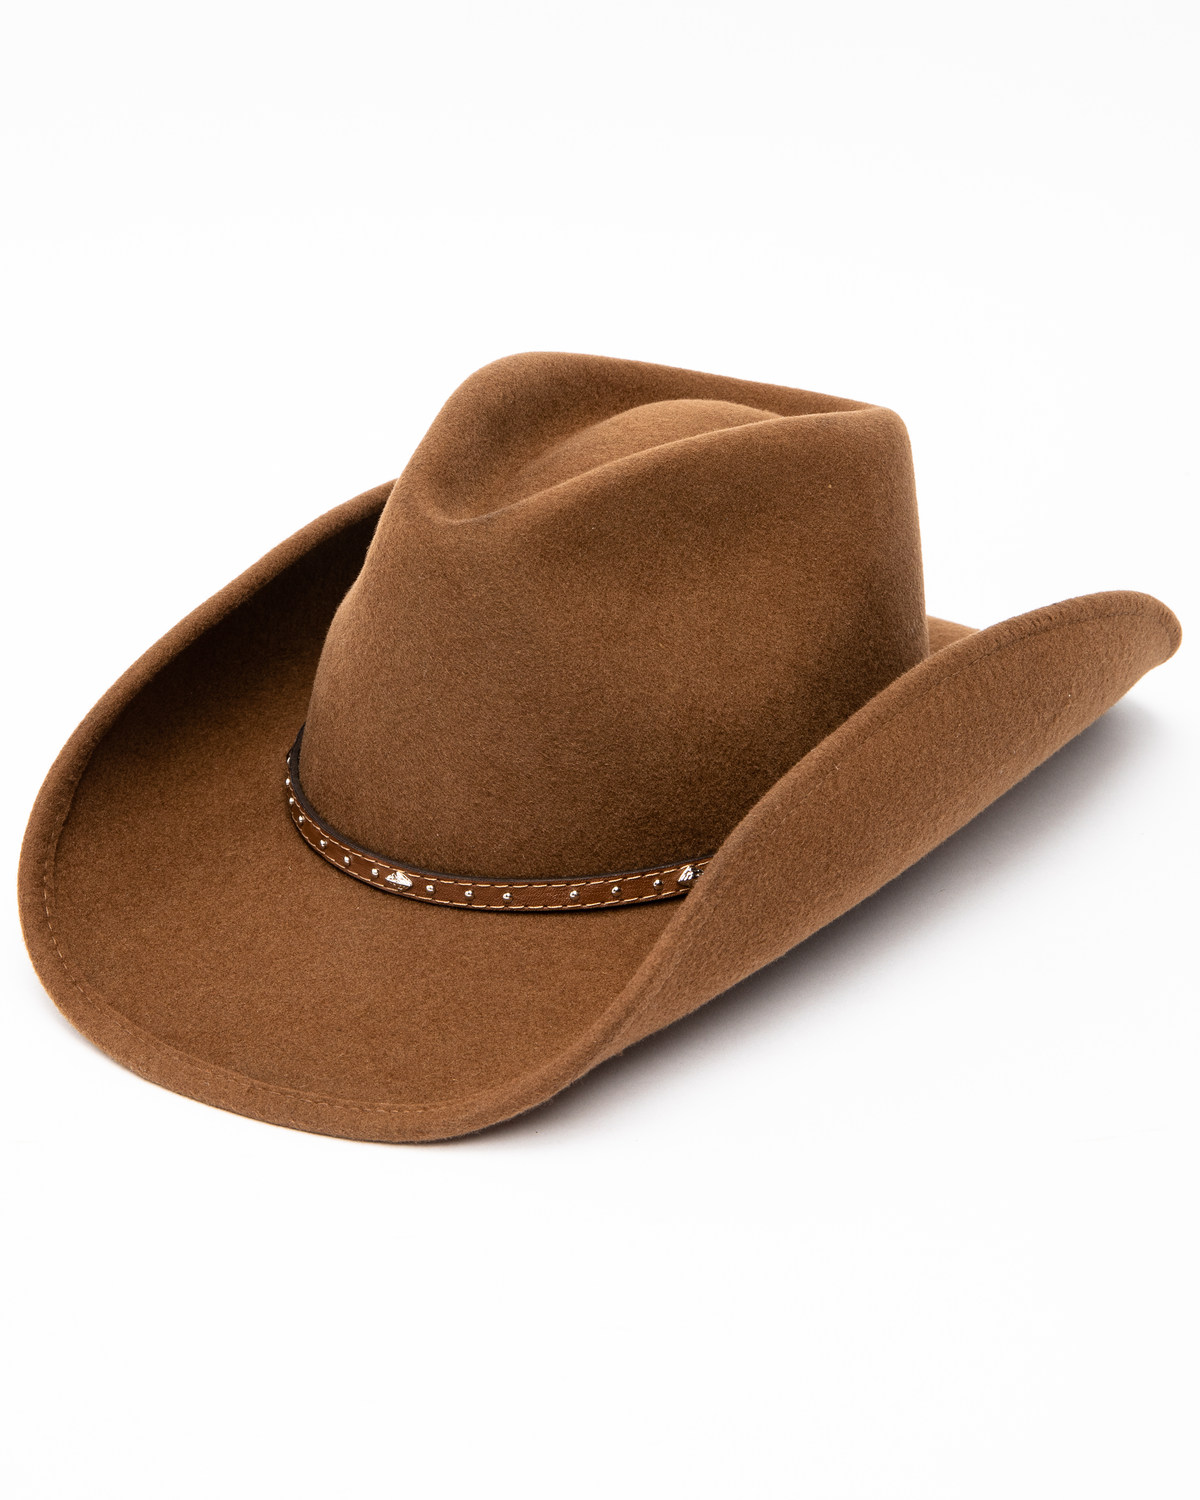 Cody James Fawn Felt Cowboy Hat